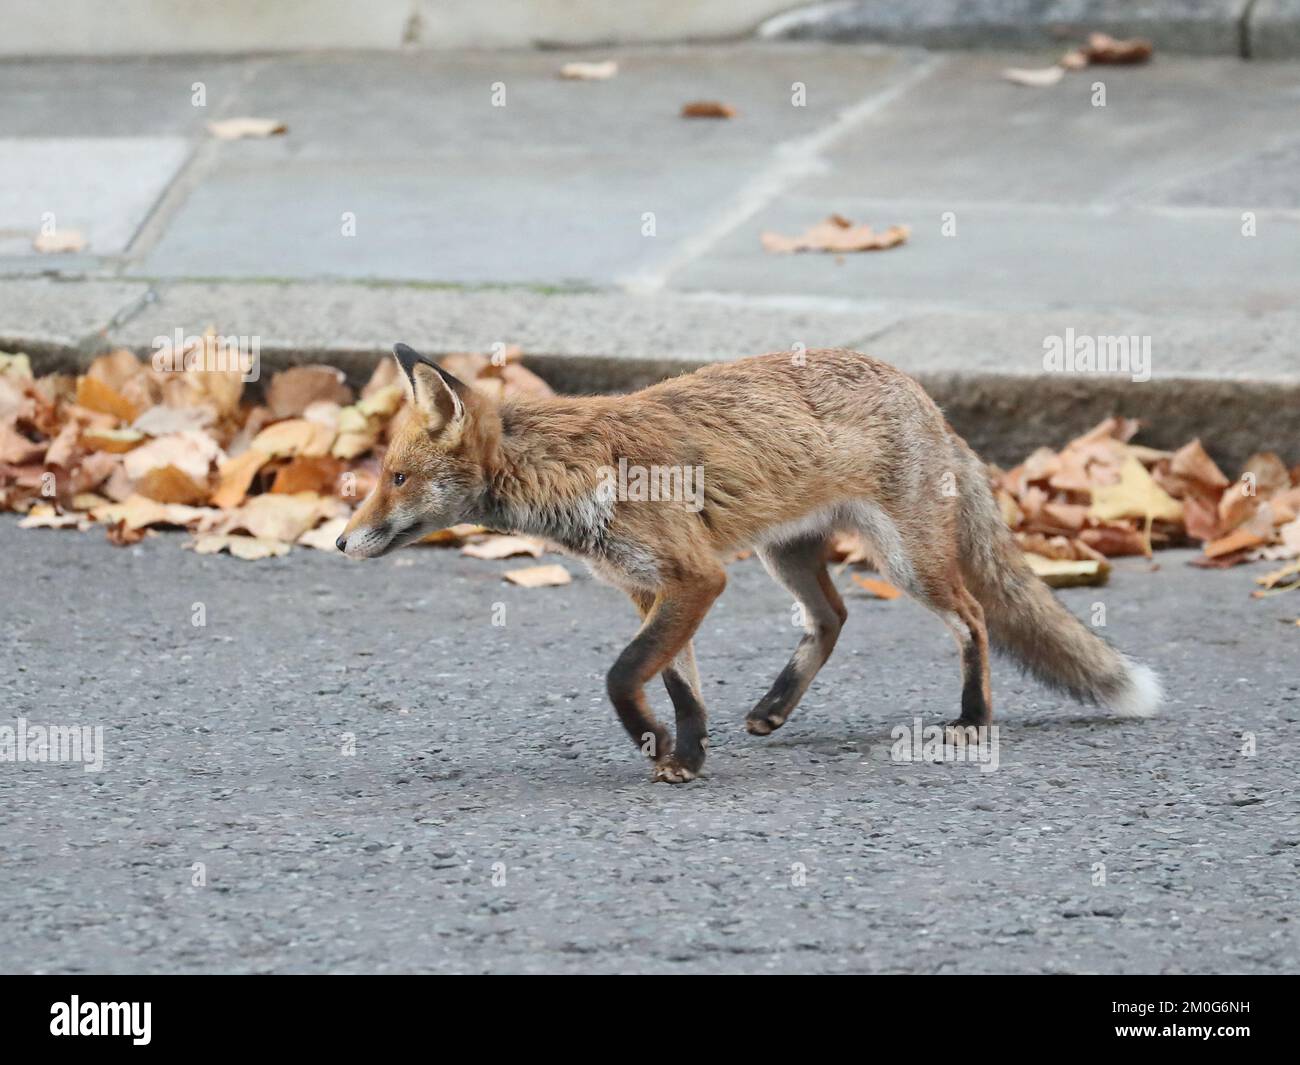 Downing Street, London, UK. 6th Dec, 2022. An urban fox roamed Downing Street. Credit: Uwe Deffner/Alamy Live News Stock Photo